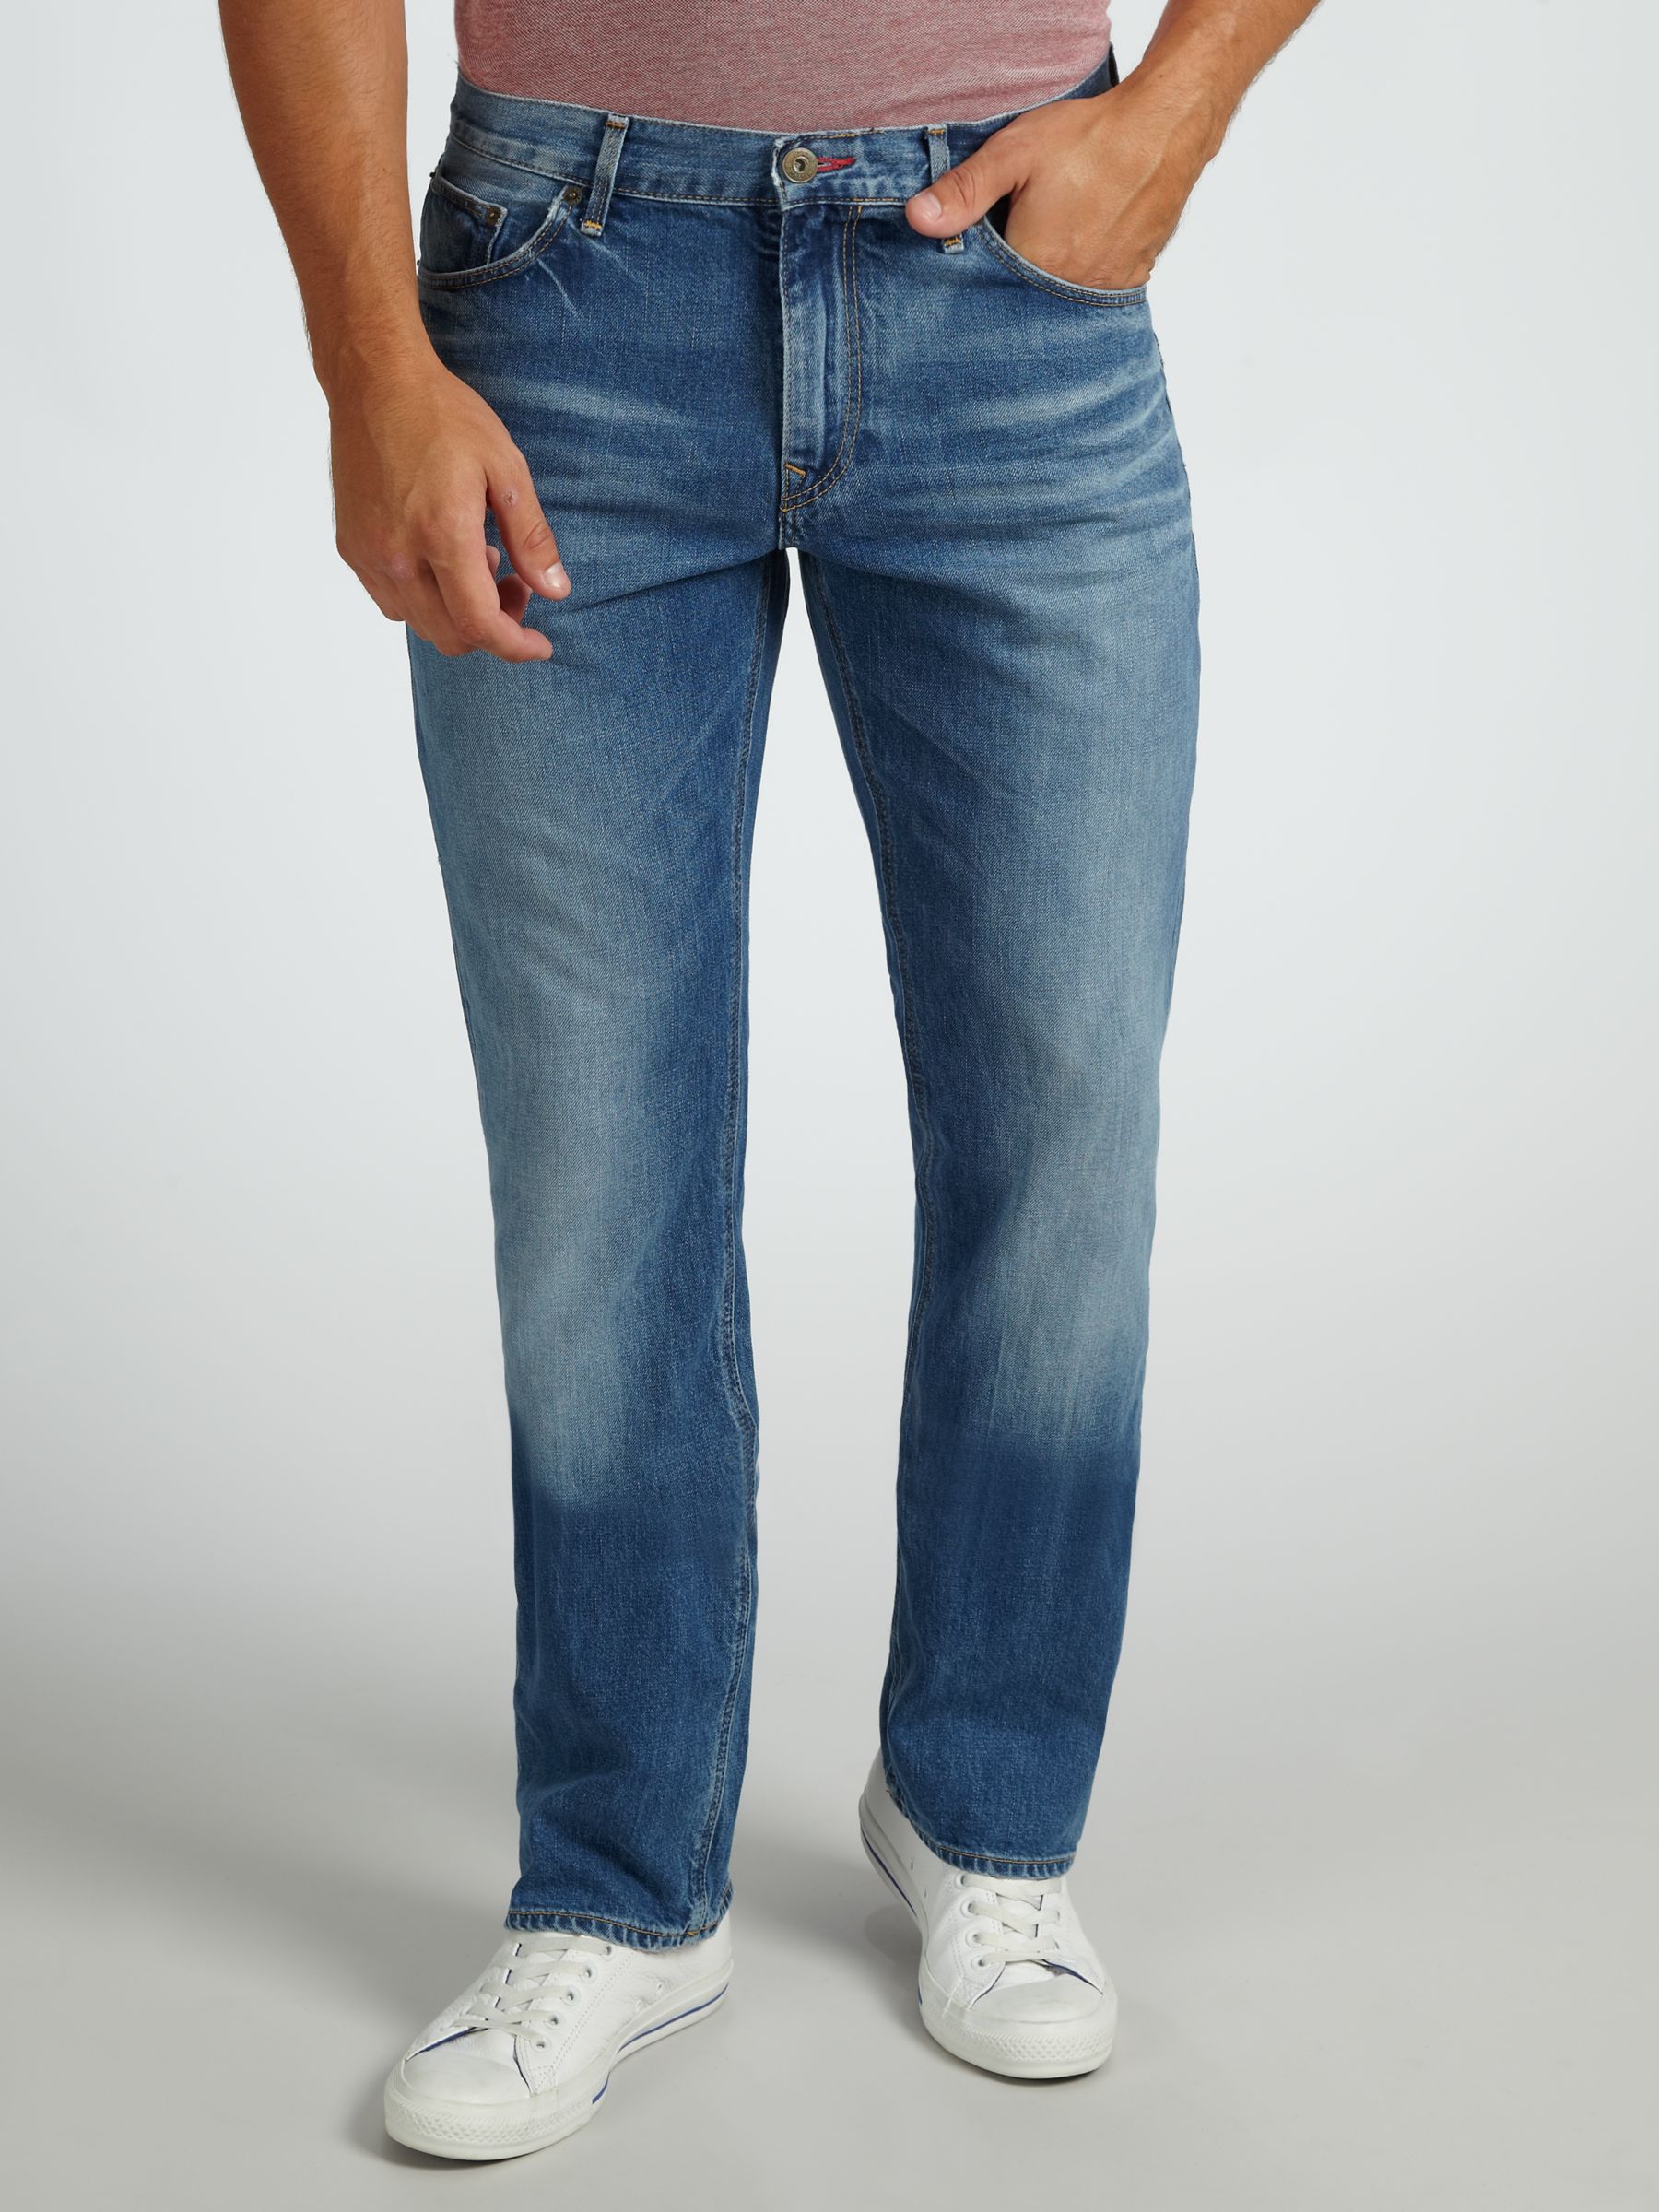 Levi's 501 Original Straight Jeans, Marlon at John Lewis